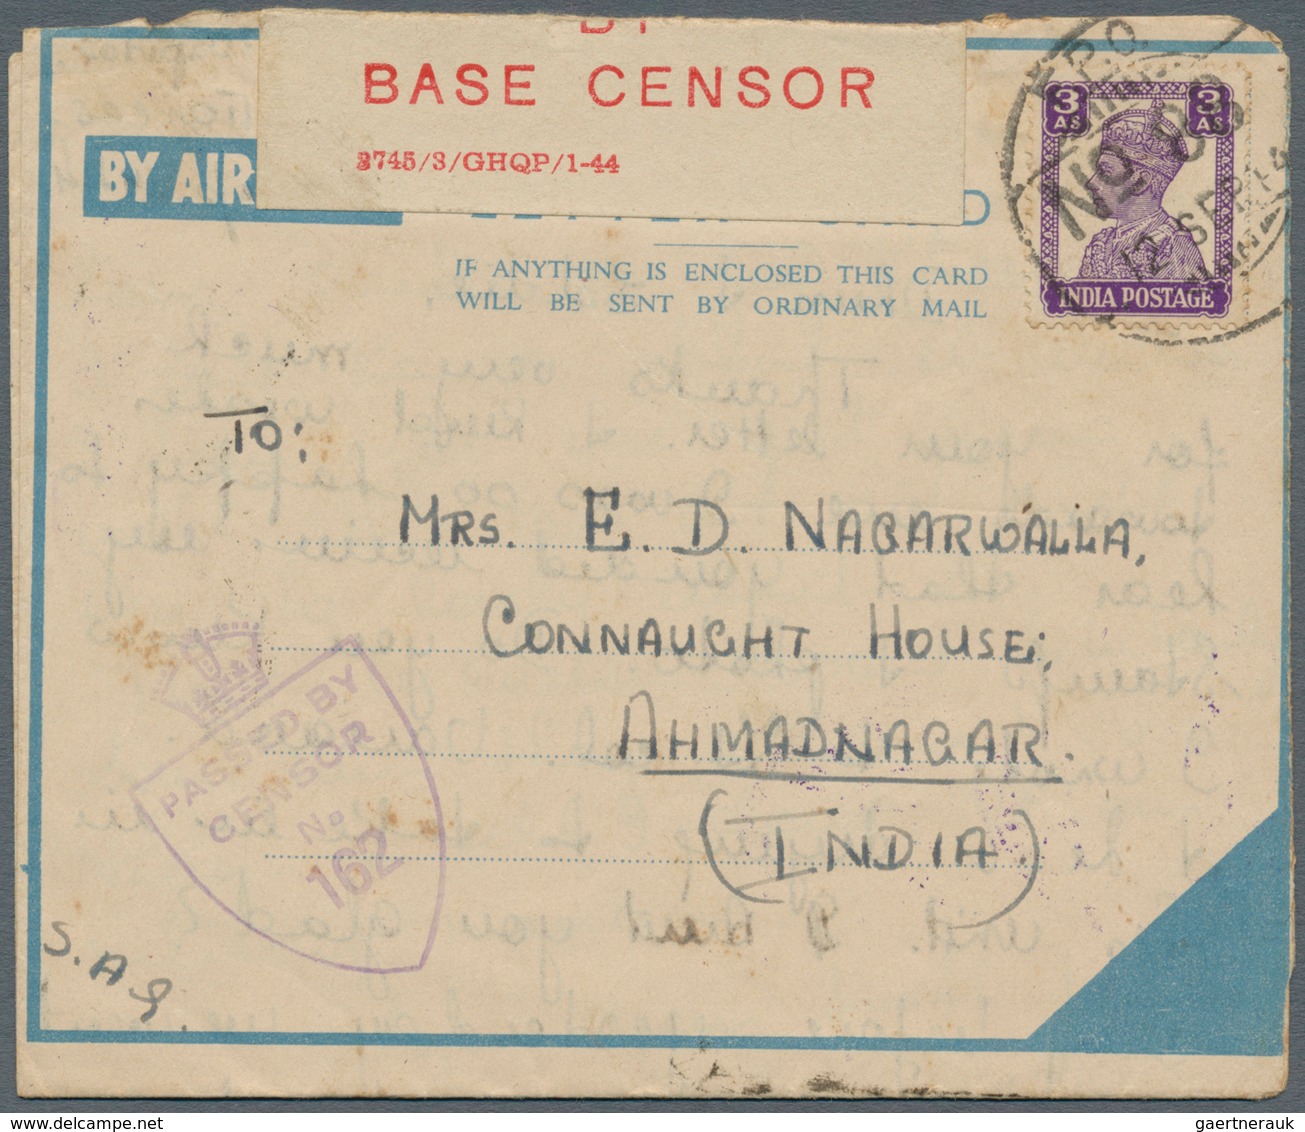 08780 Indien - Feldpost: 1944 (12 Sep) SAIDA, Lebanon: 'Blue Ribbon' Air Mail Letter Card Used From Indian - Militärpostmarken